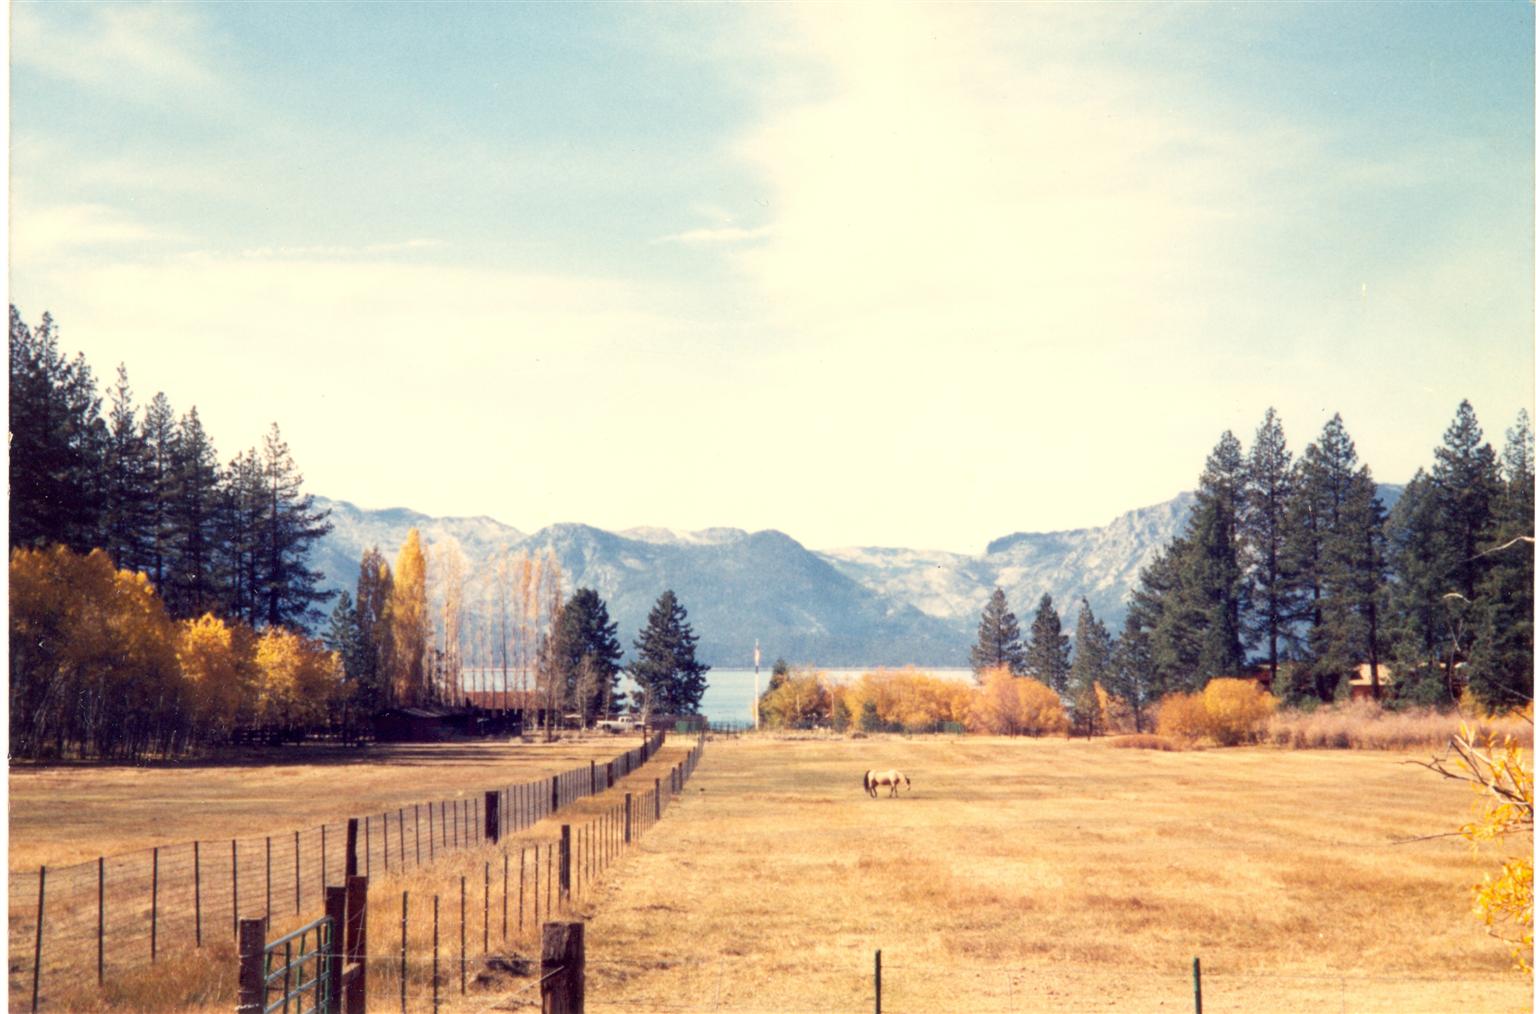 Horse in field by Lake Tahoe, Nevada (0000)